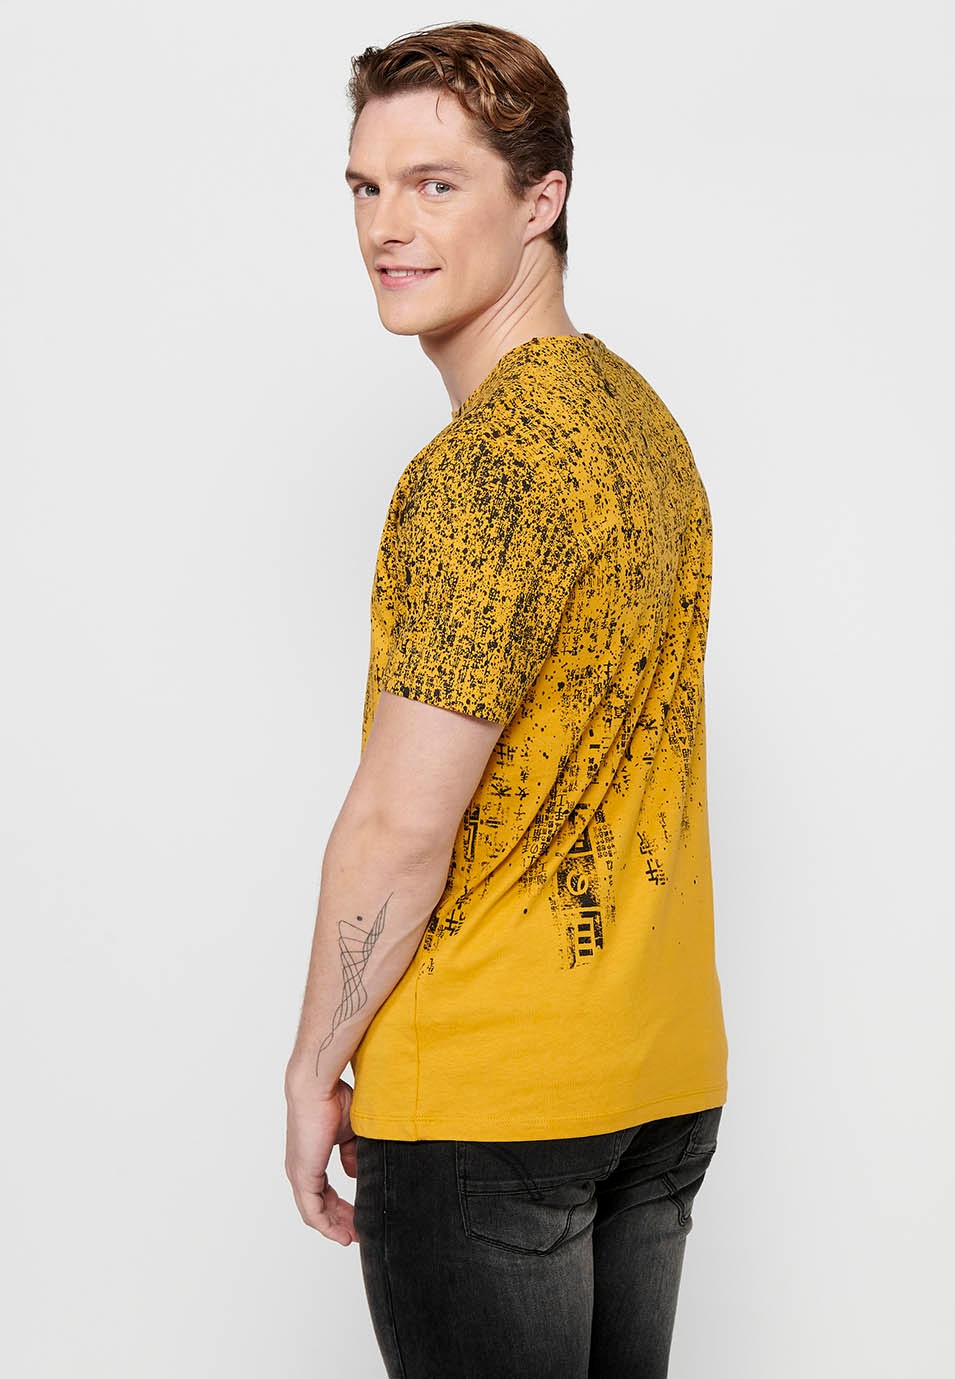 Camiseta de manga corta de algodón, color amarillo para hombre 1